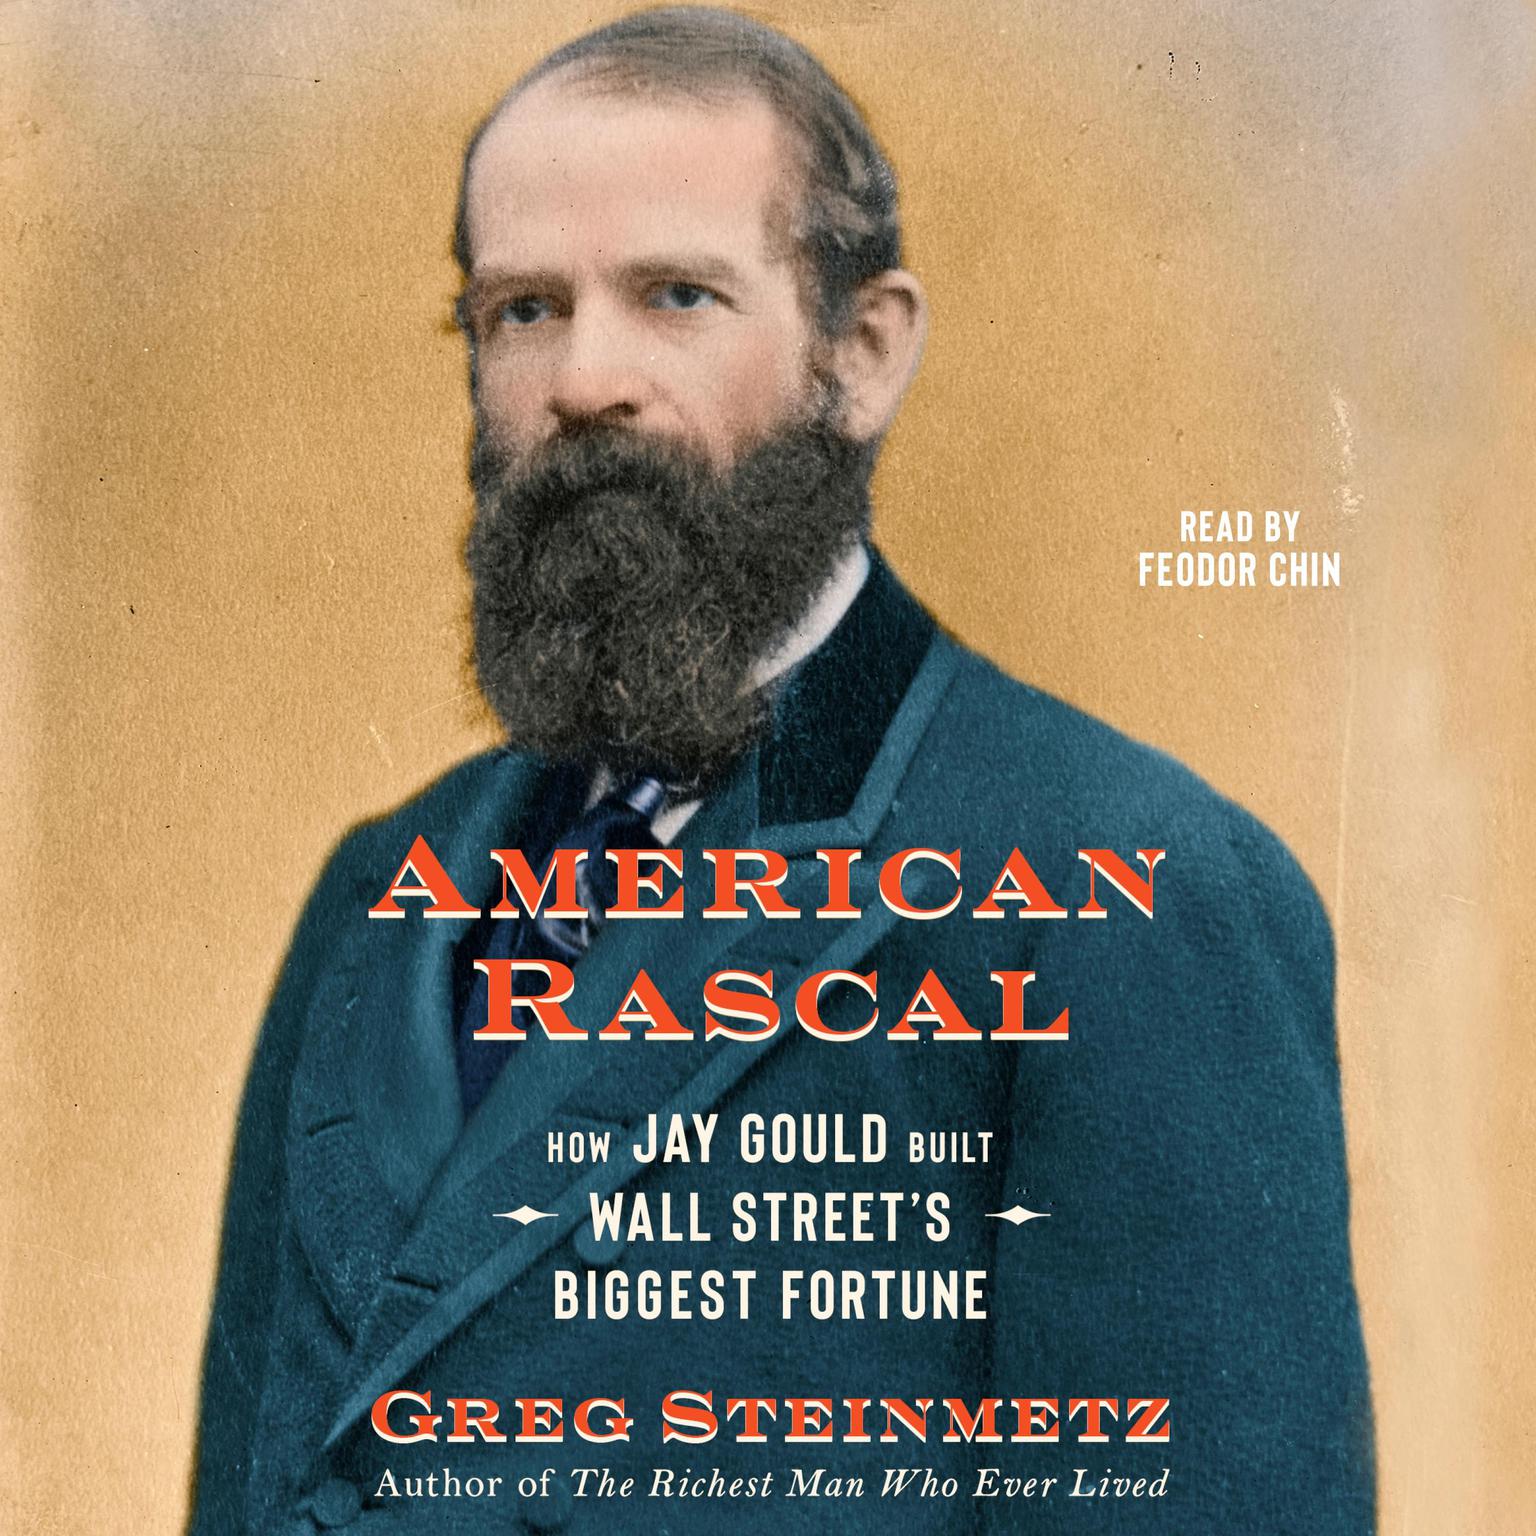 American Rascal Audiobook By Greg Steinmetz — Listen Now